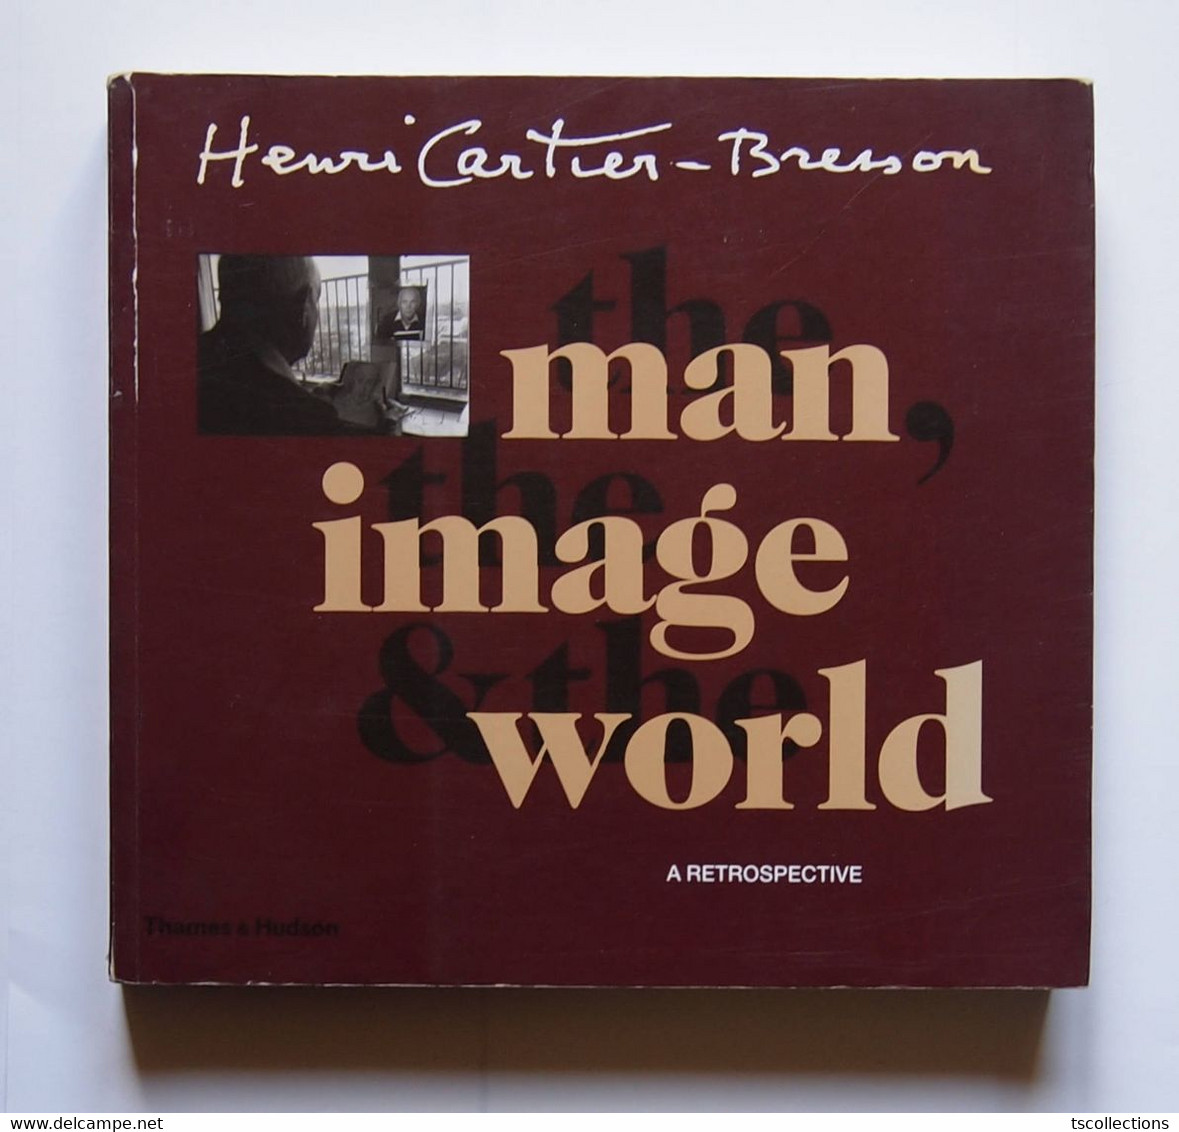 Henri Cartier-Bresson The Man, The Image And The World: A Retrospective - Fotografie